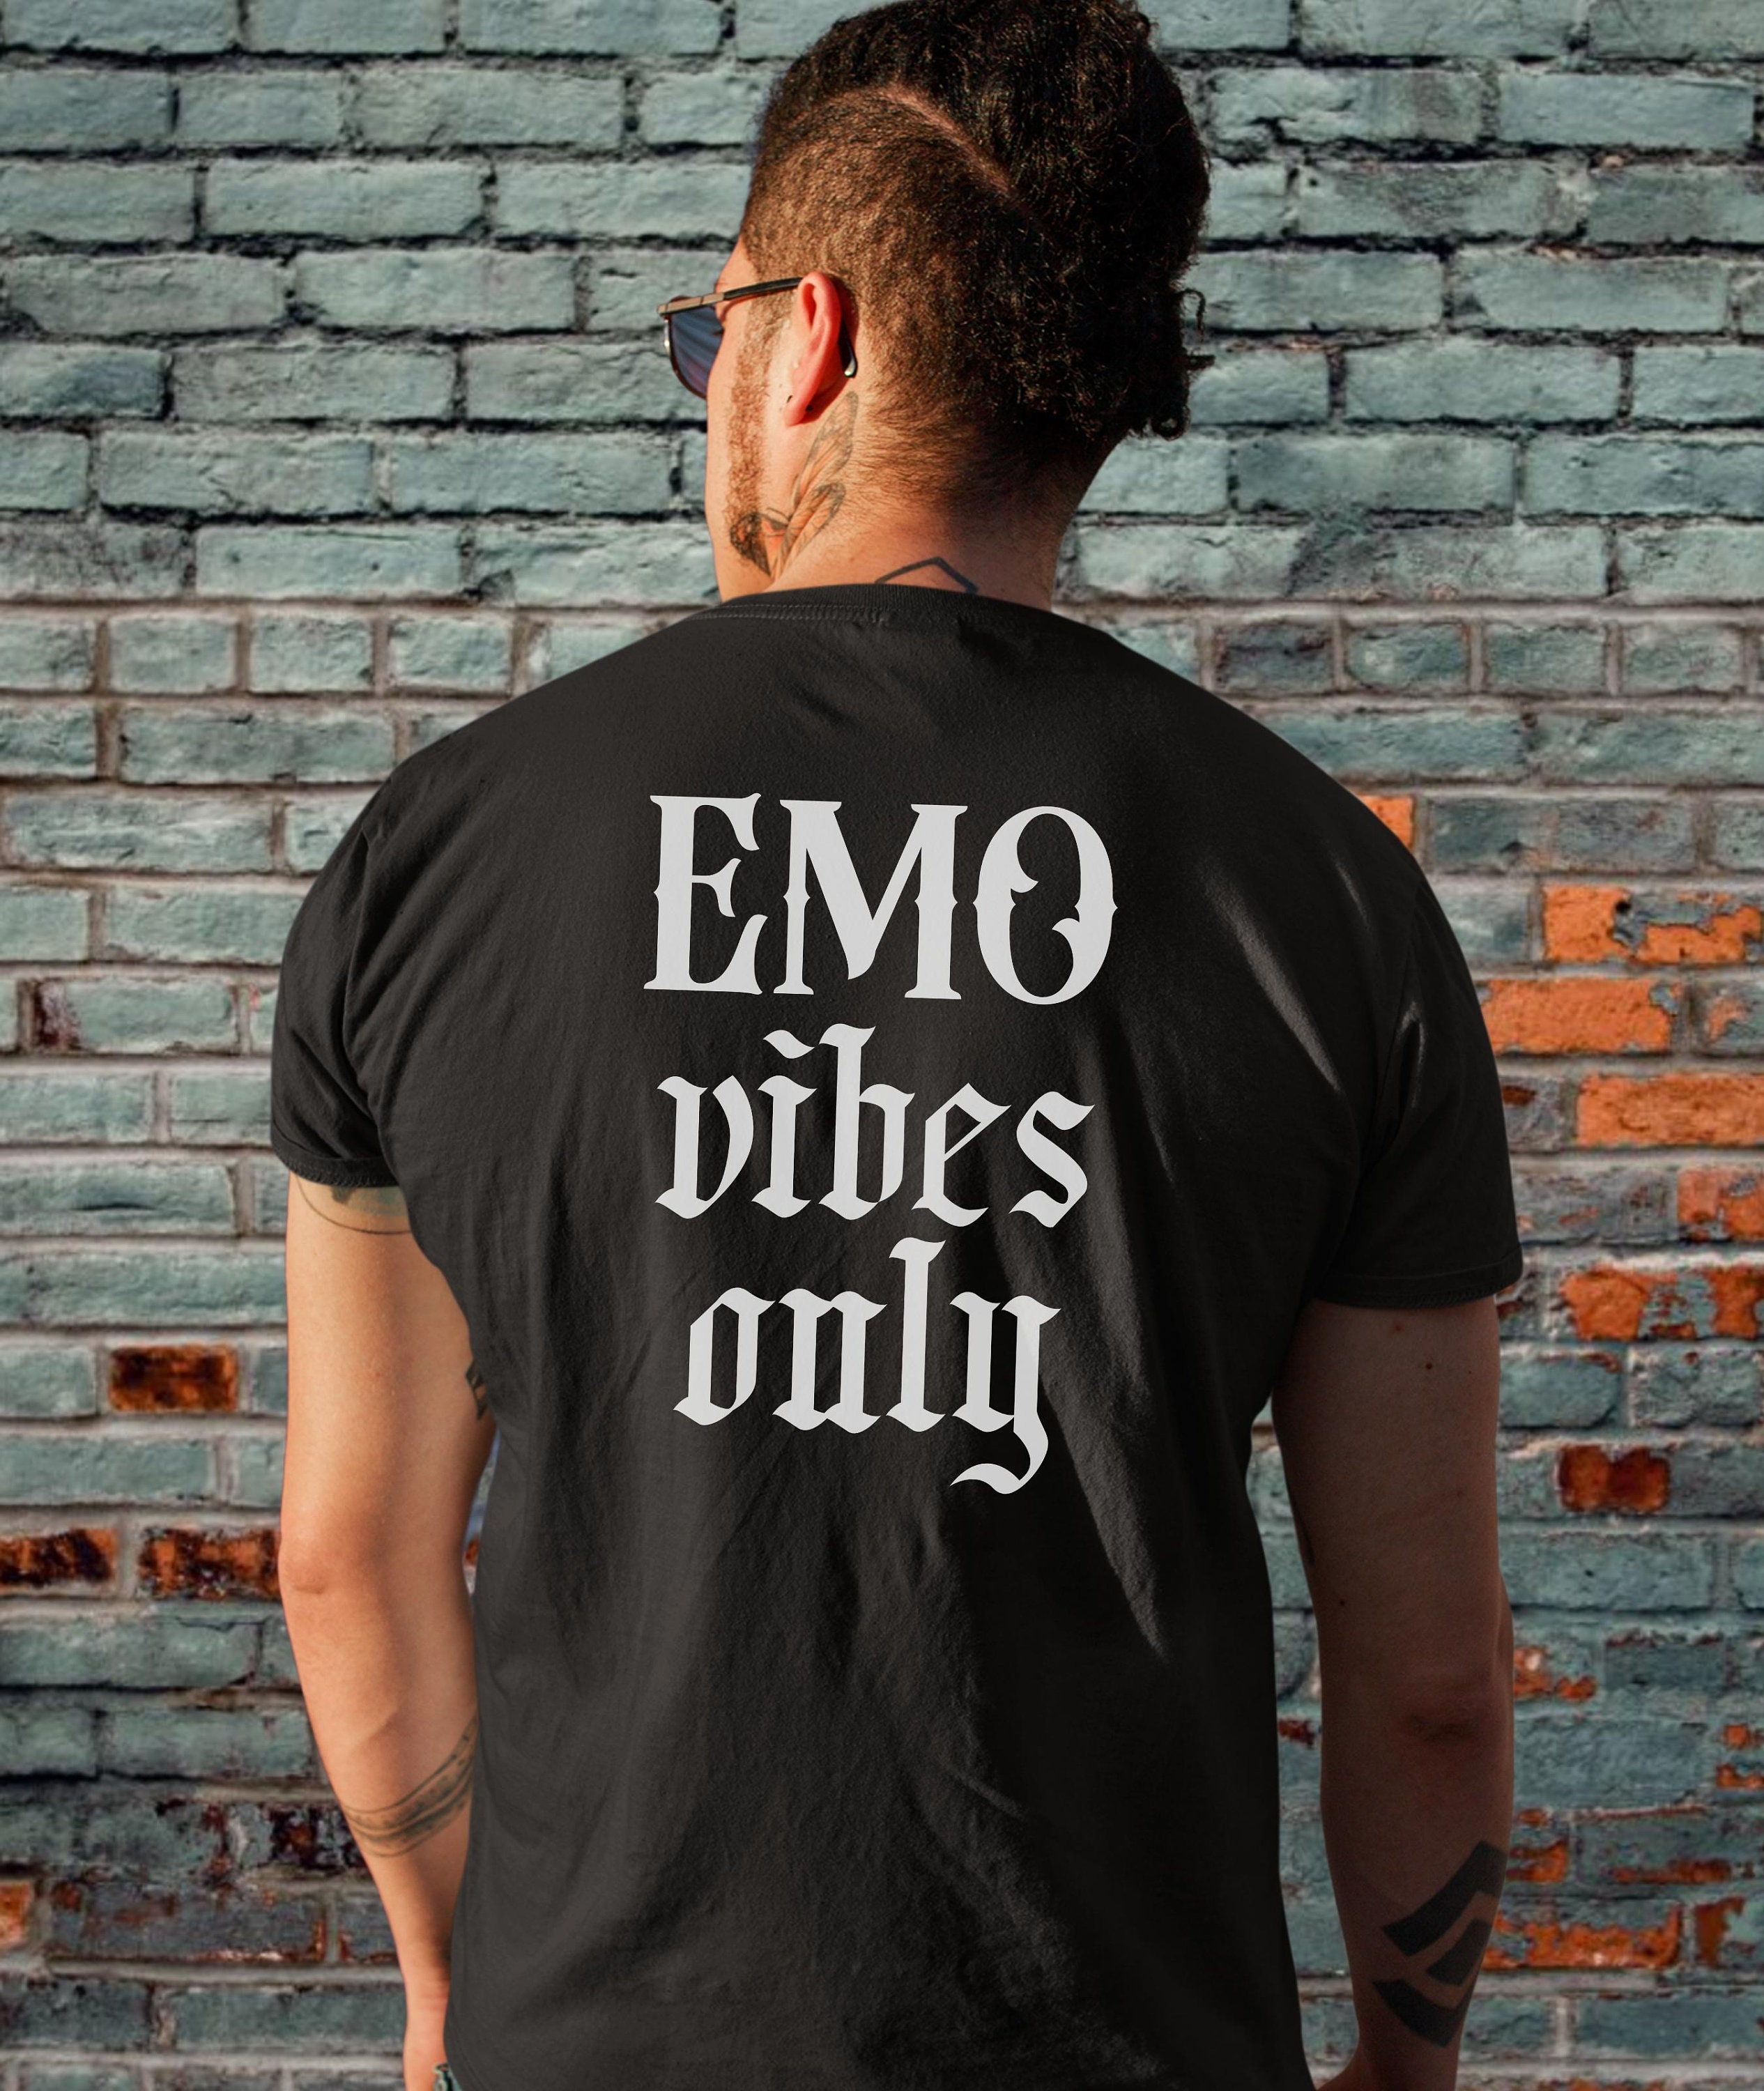 I Love Emo Boys Shirt Emo Clothing Emo Gifts T Shirt for 